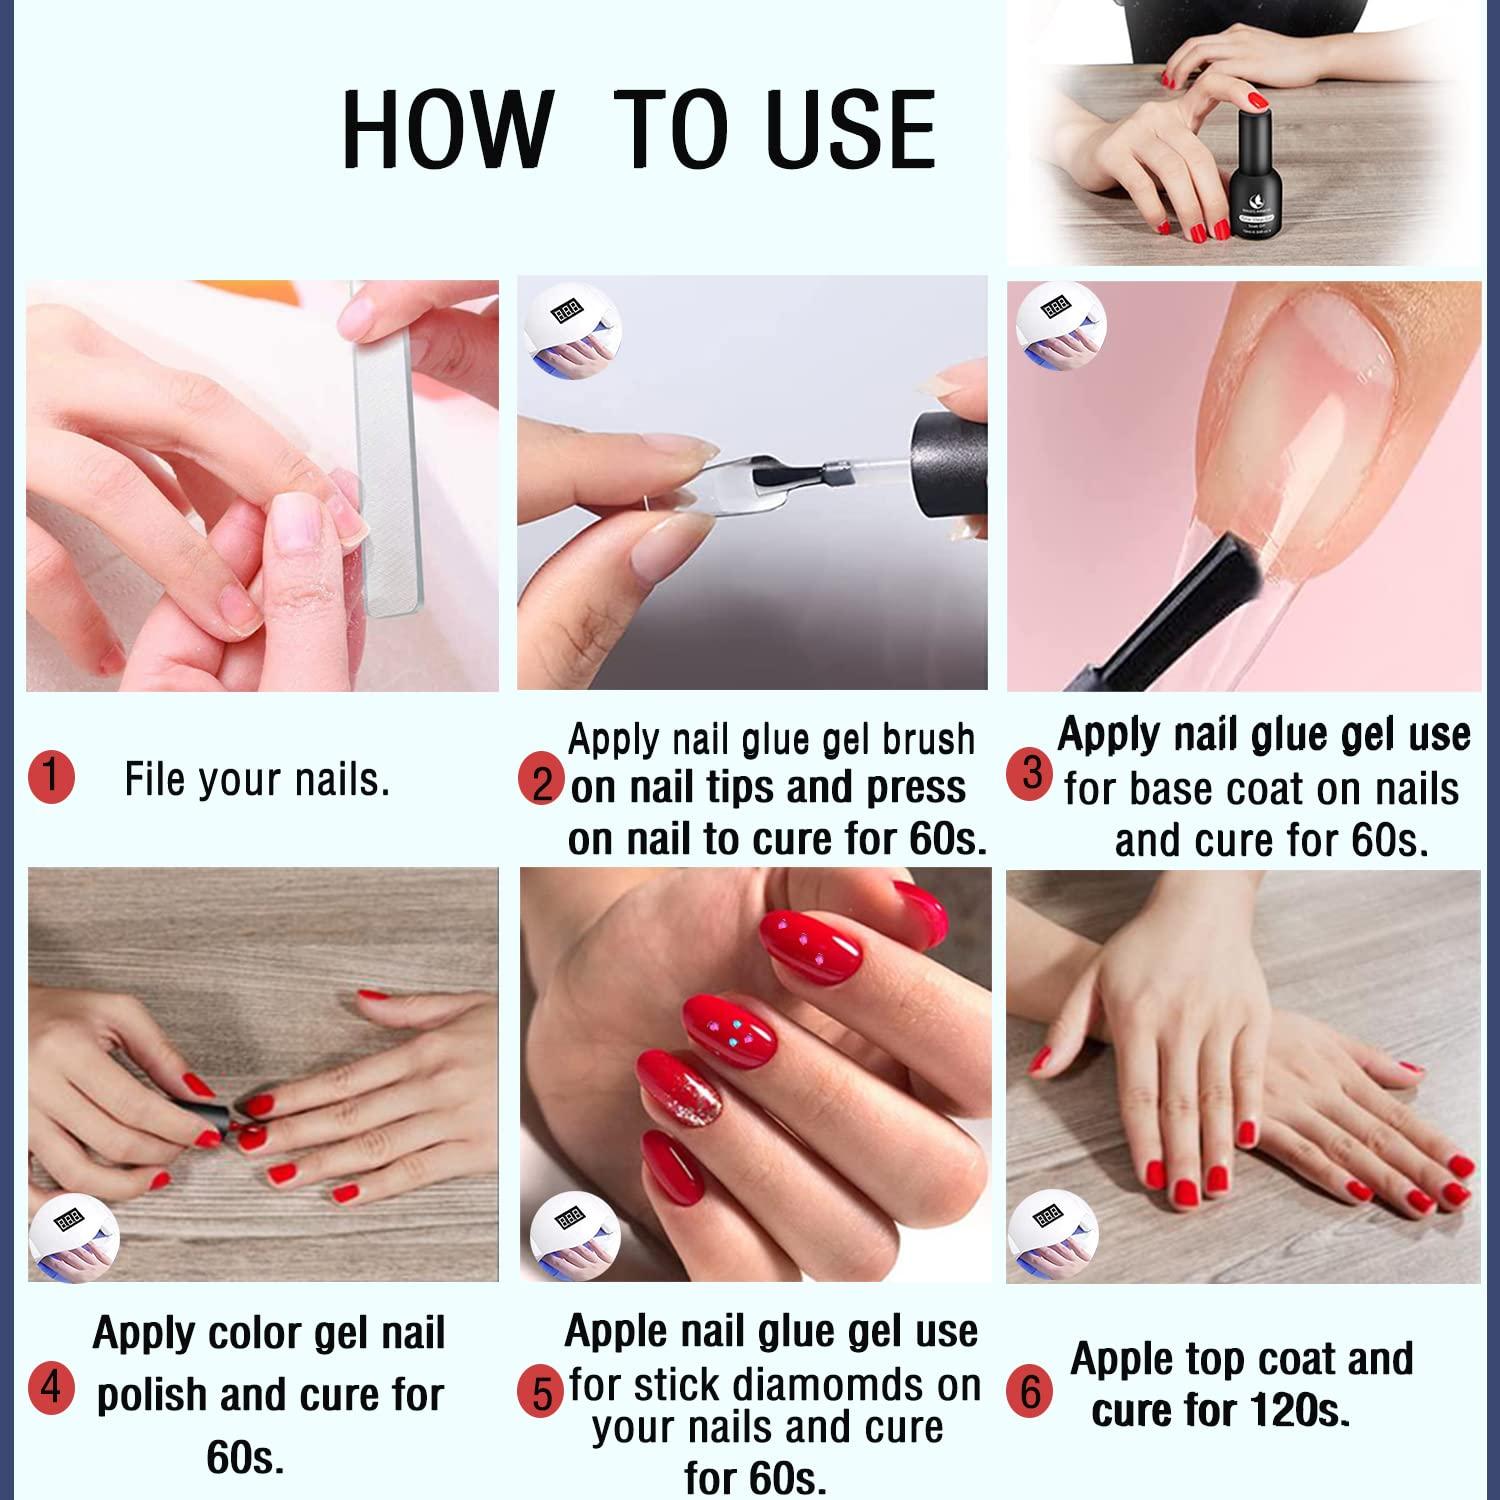 How to Correctly Apply Nail Glue - YouTube